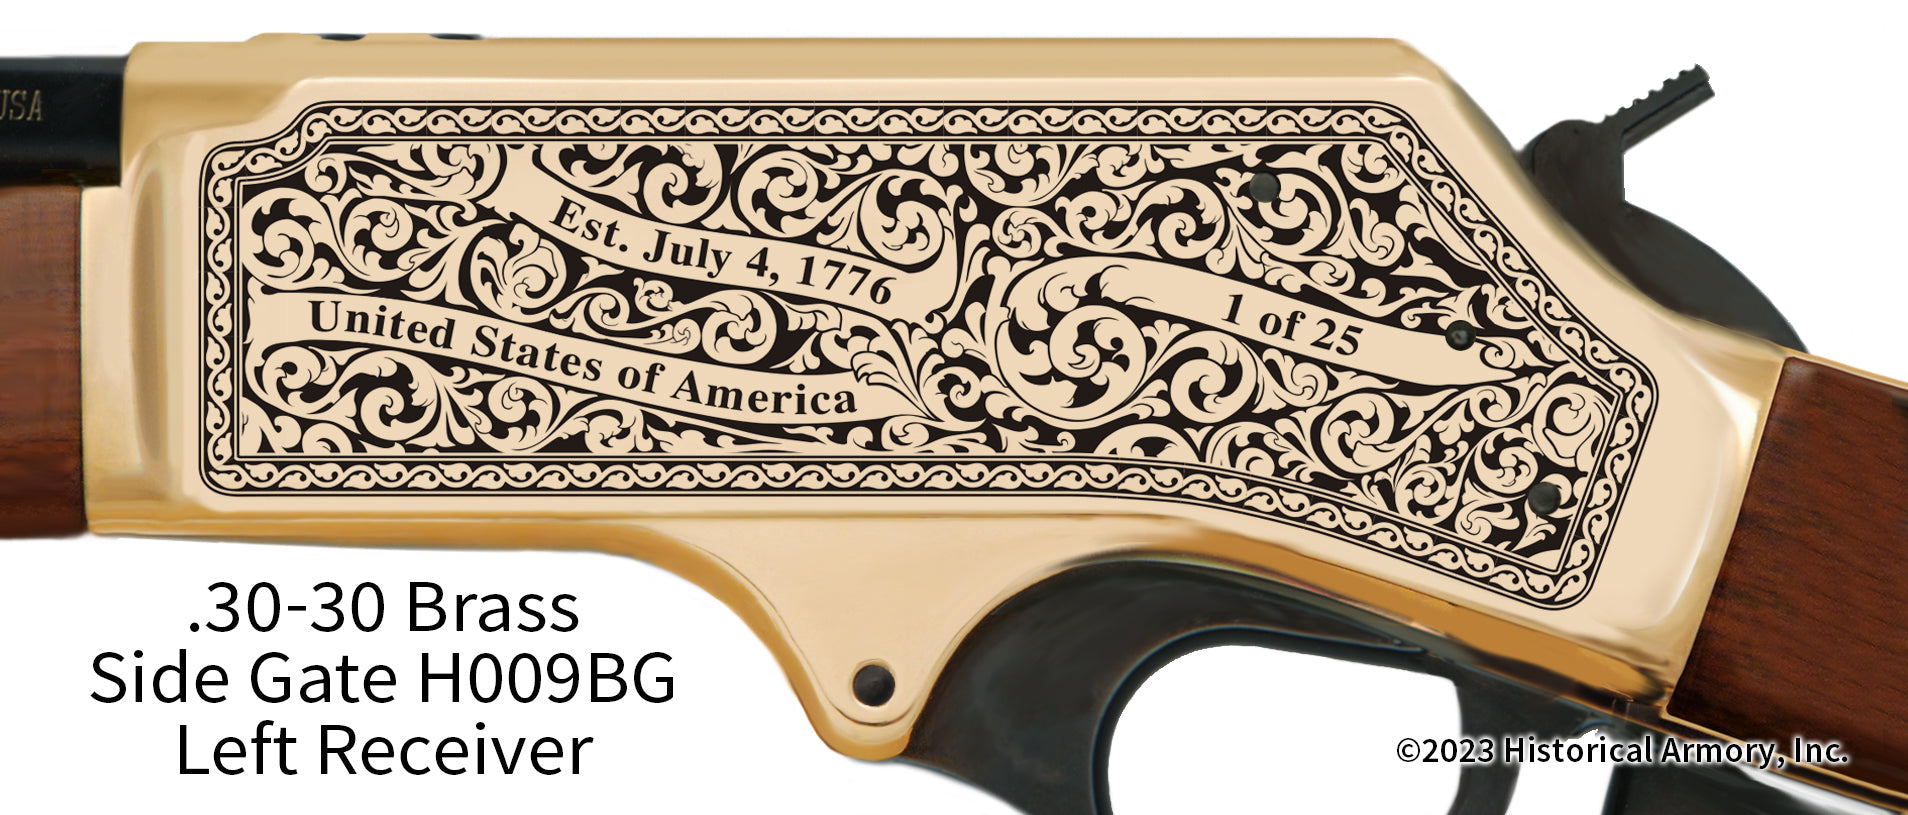 Turner County South Dakota Engraved Henry .30-30 Brass Side Gate Rifle